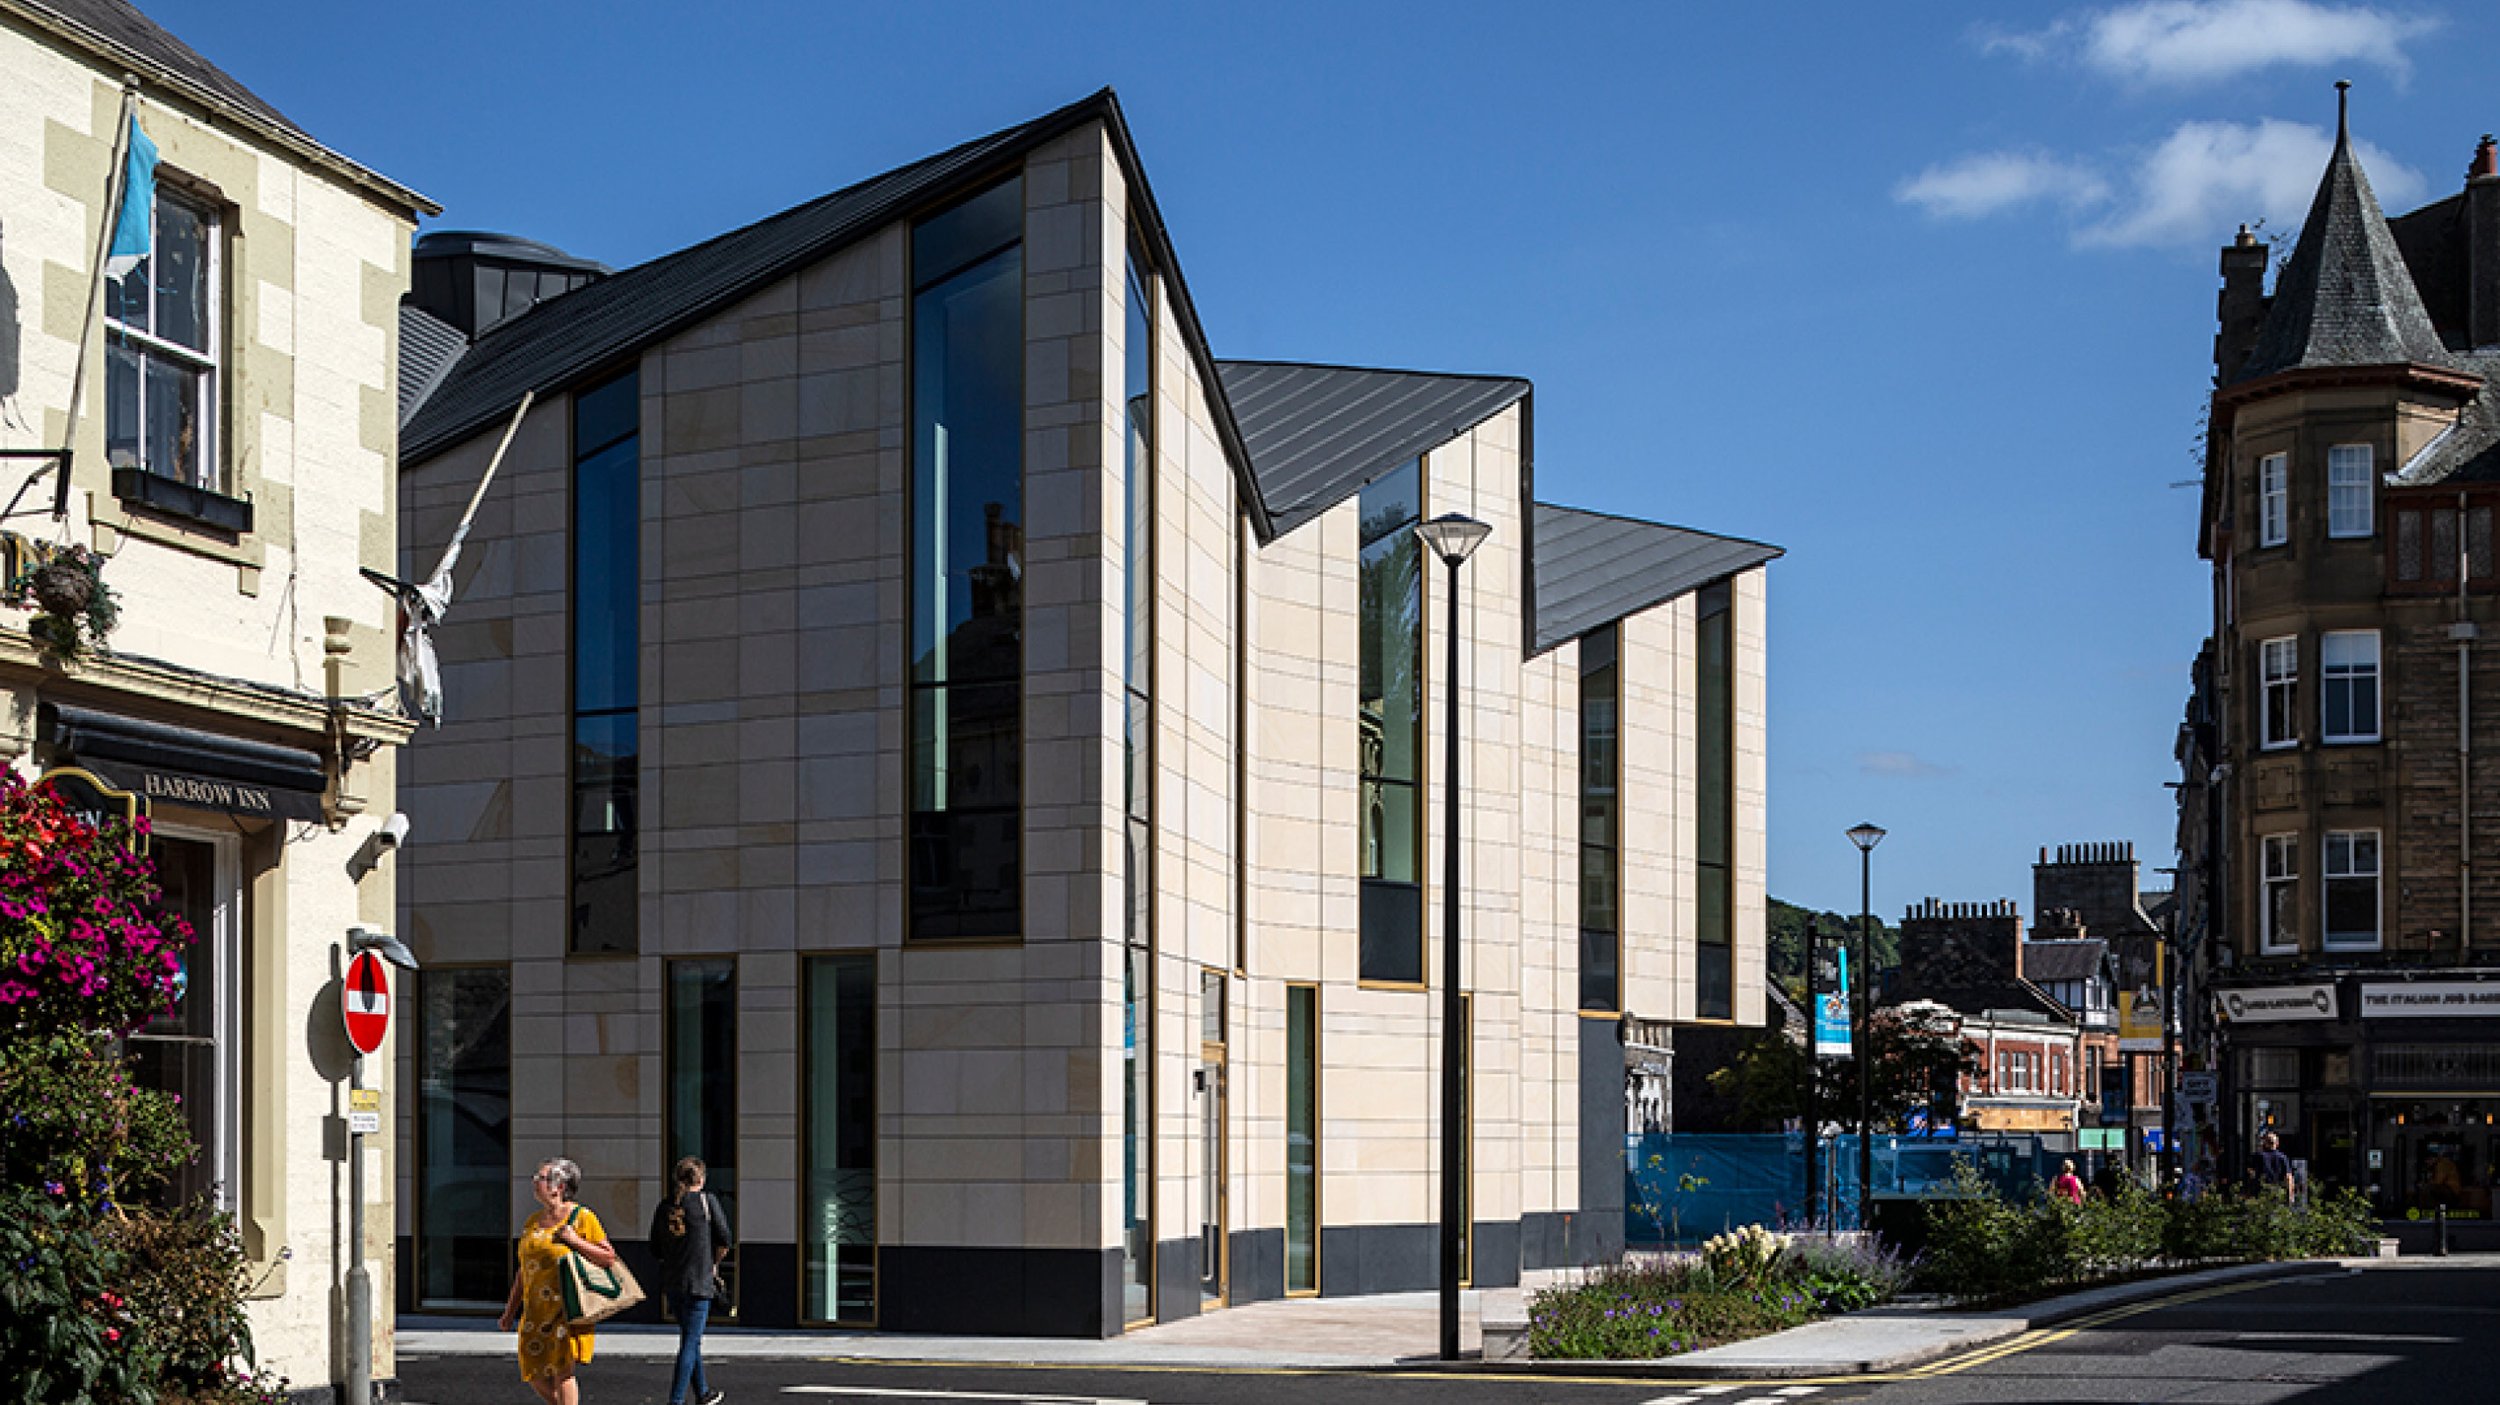 eaa-edinburgh-architectural-association-scotland-uk-awards-2022-winners-large-project-.jpg